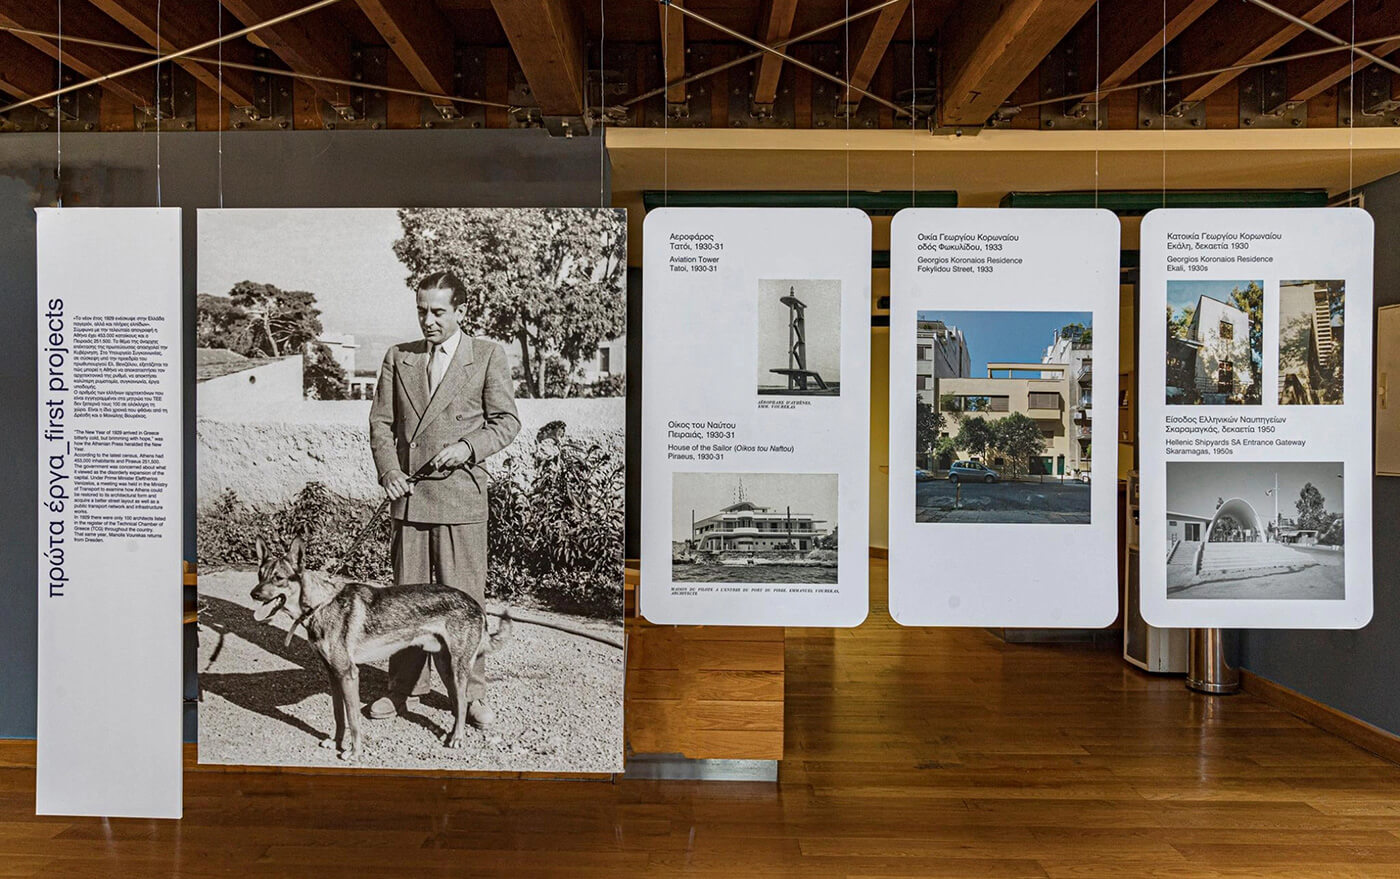 Tο μουσείο Μπενάκη έρχεται στο ΚΑΜ - Κέντρο Αρχιτεκτονικής της Μεσογείου